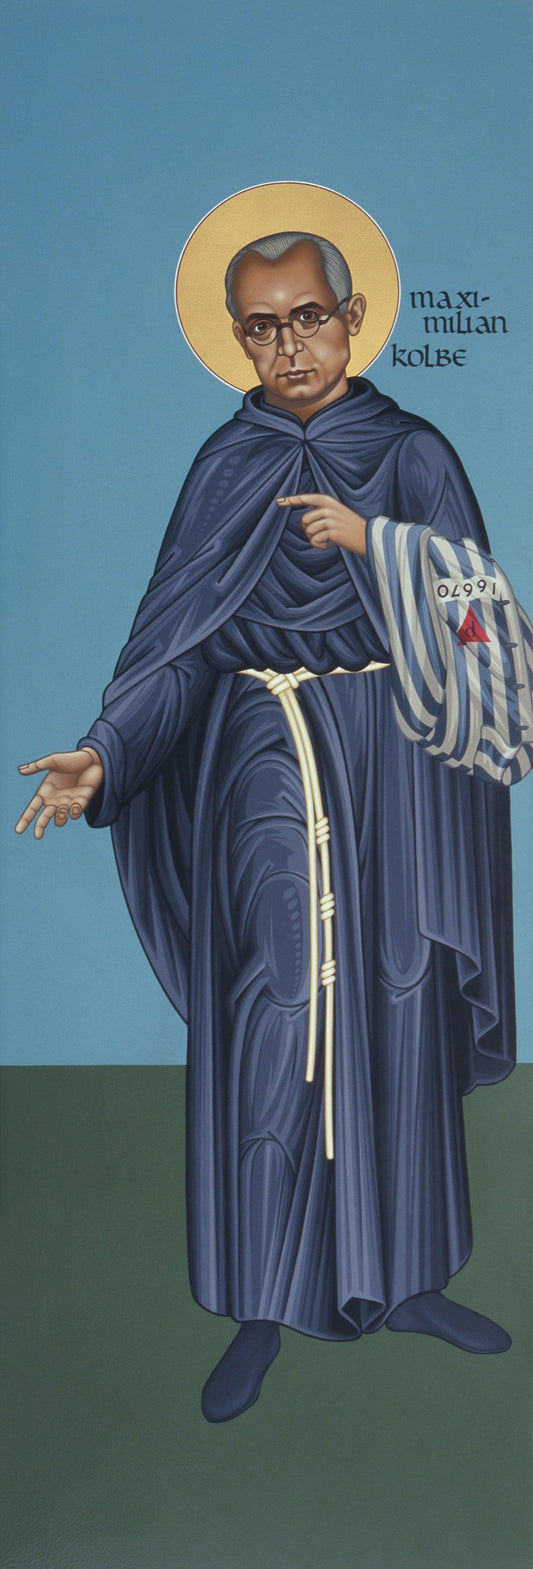 Giclée Print - St. Maximilian Kolbe by R. Lentz - trinitystores